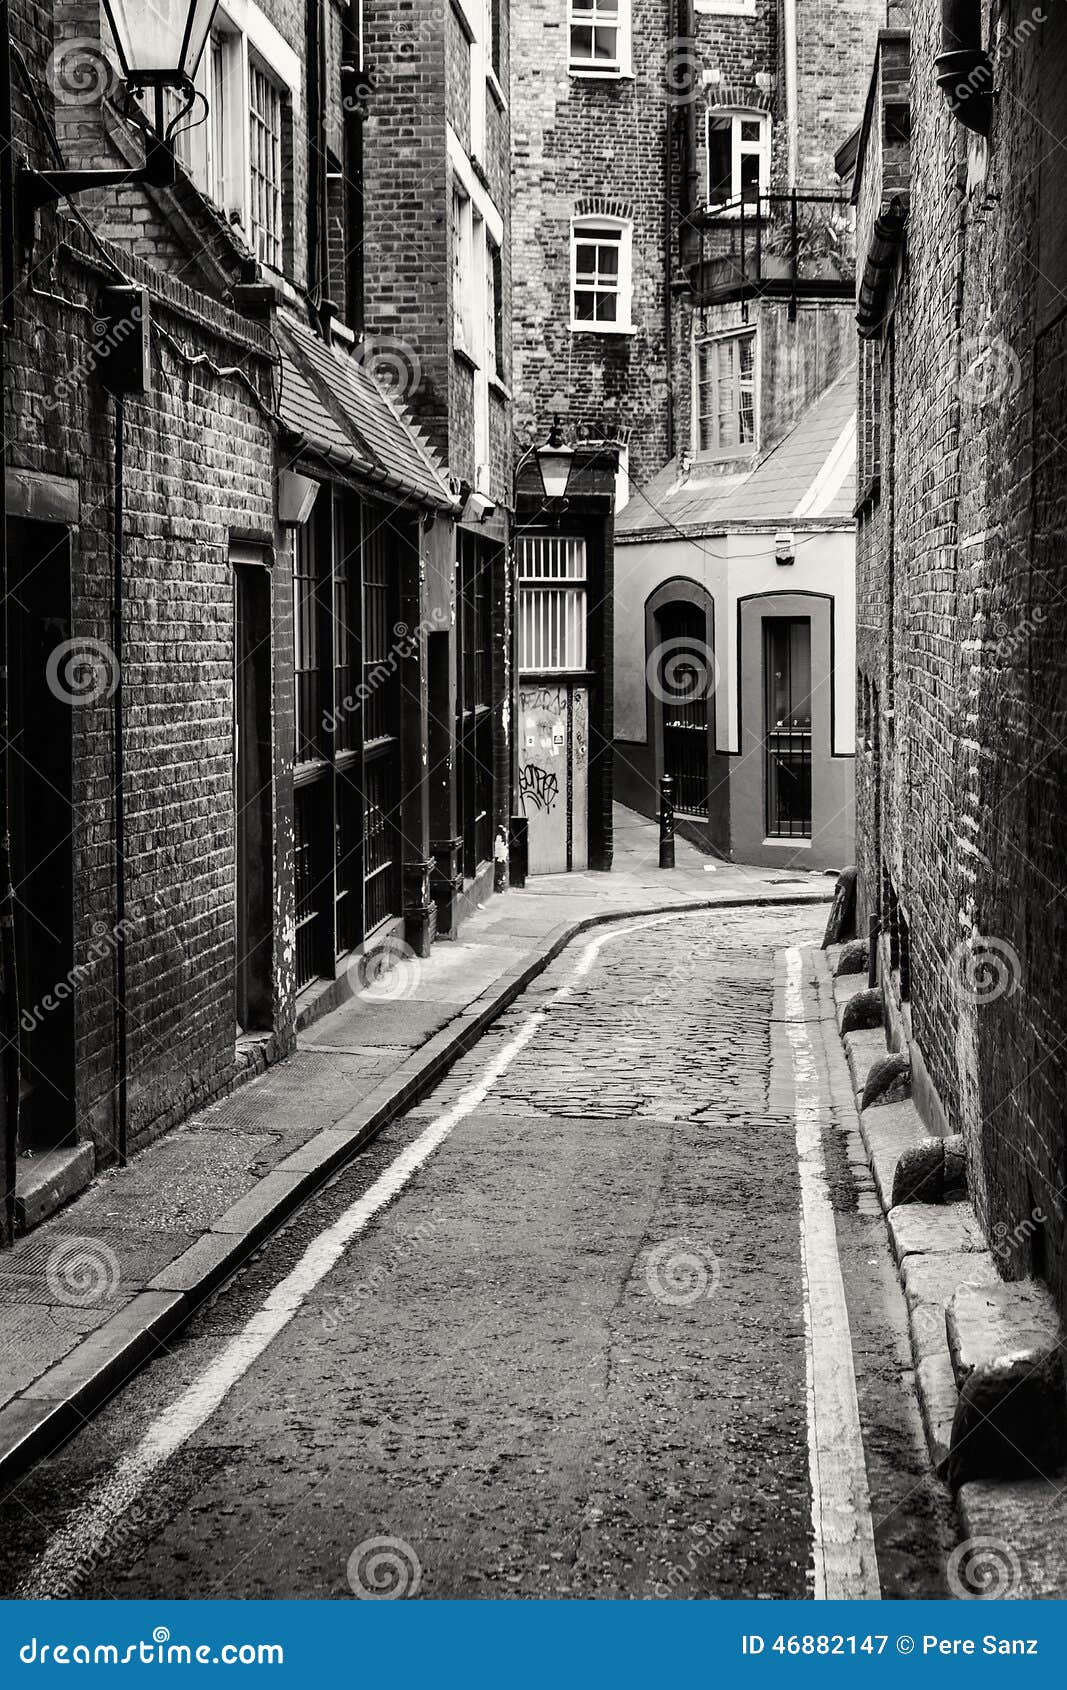 passage in whitechapel